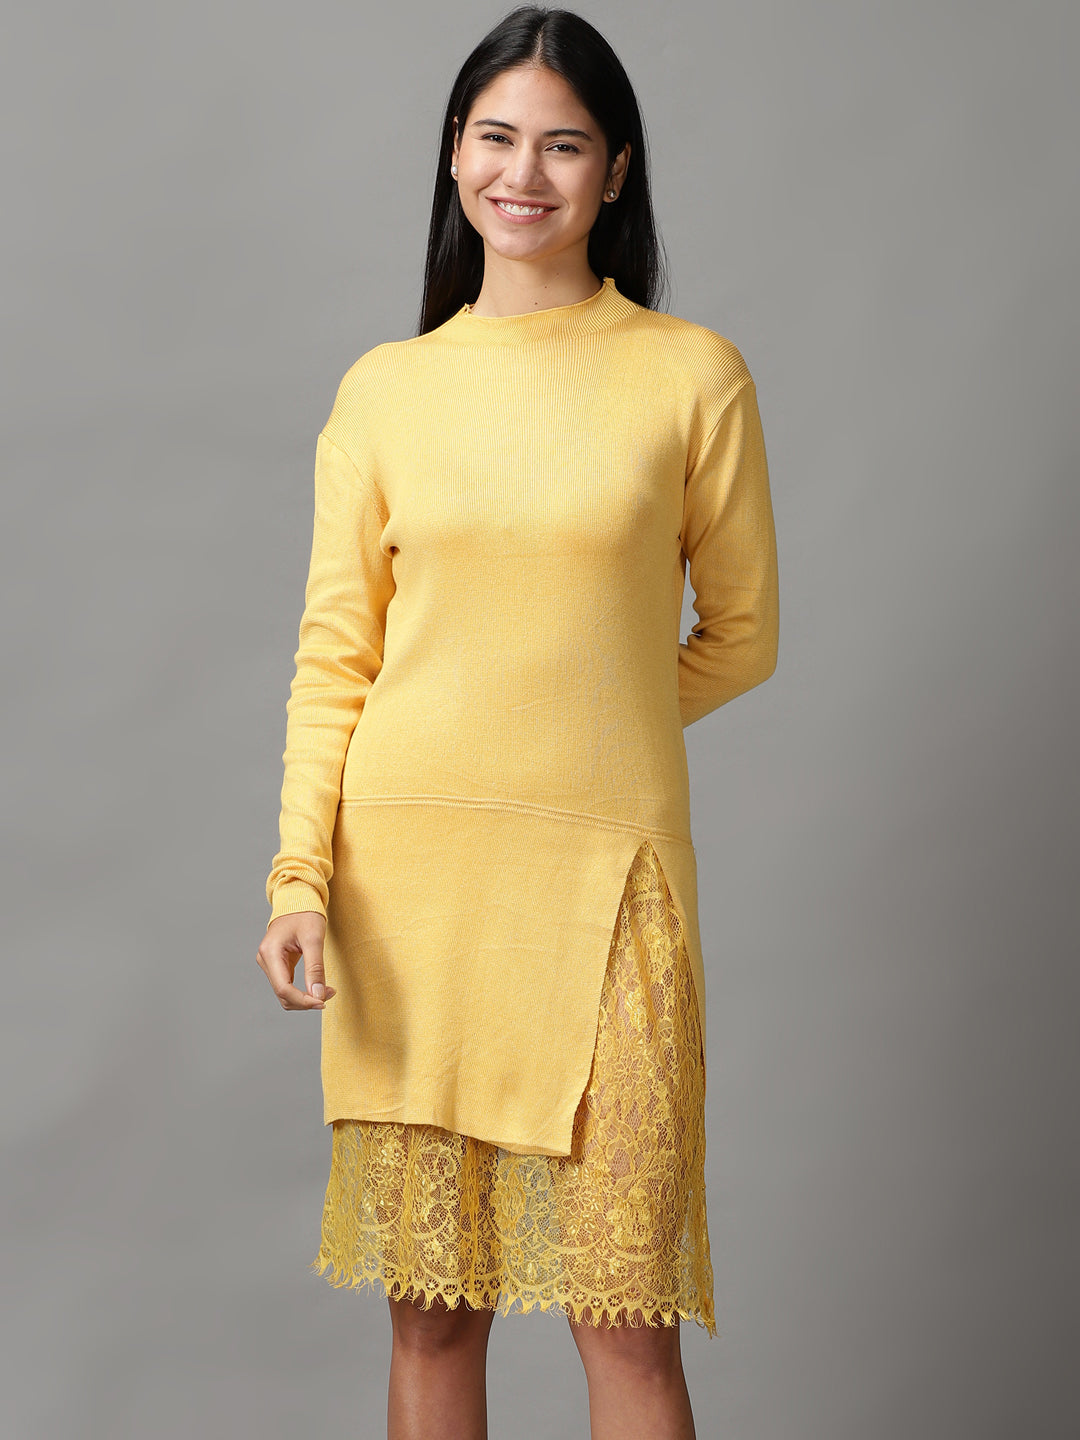 Women's Yellow Solid Bodycon Dress